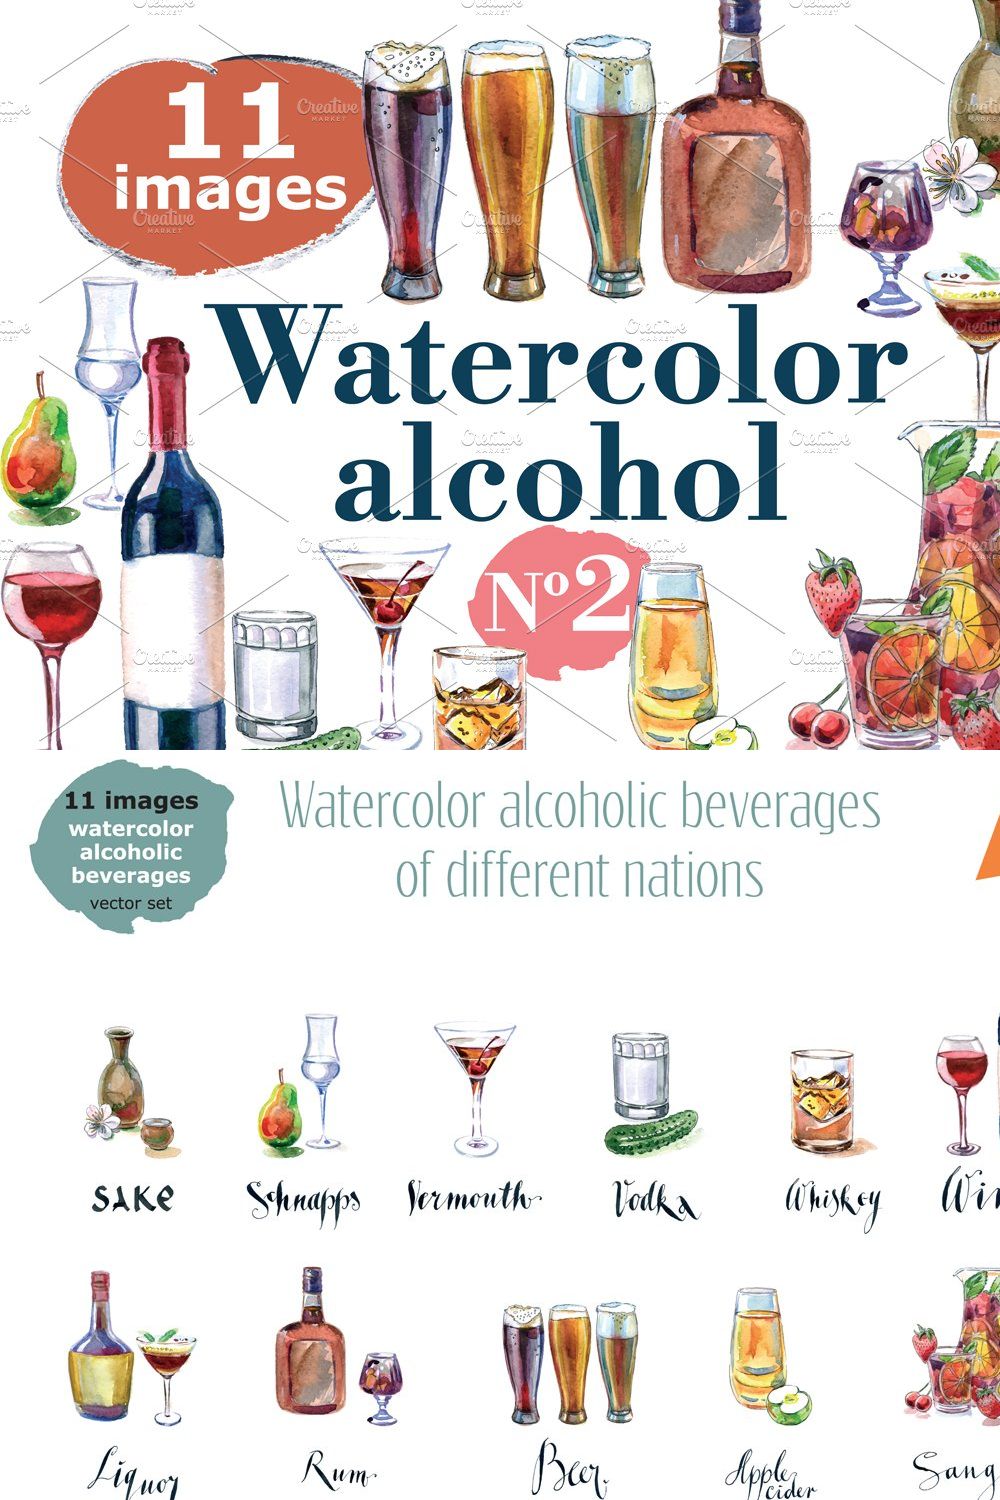 Watercolor alcohol-2 vector set pinterest preview image.